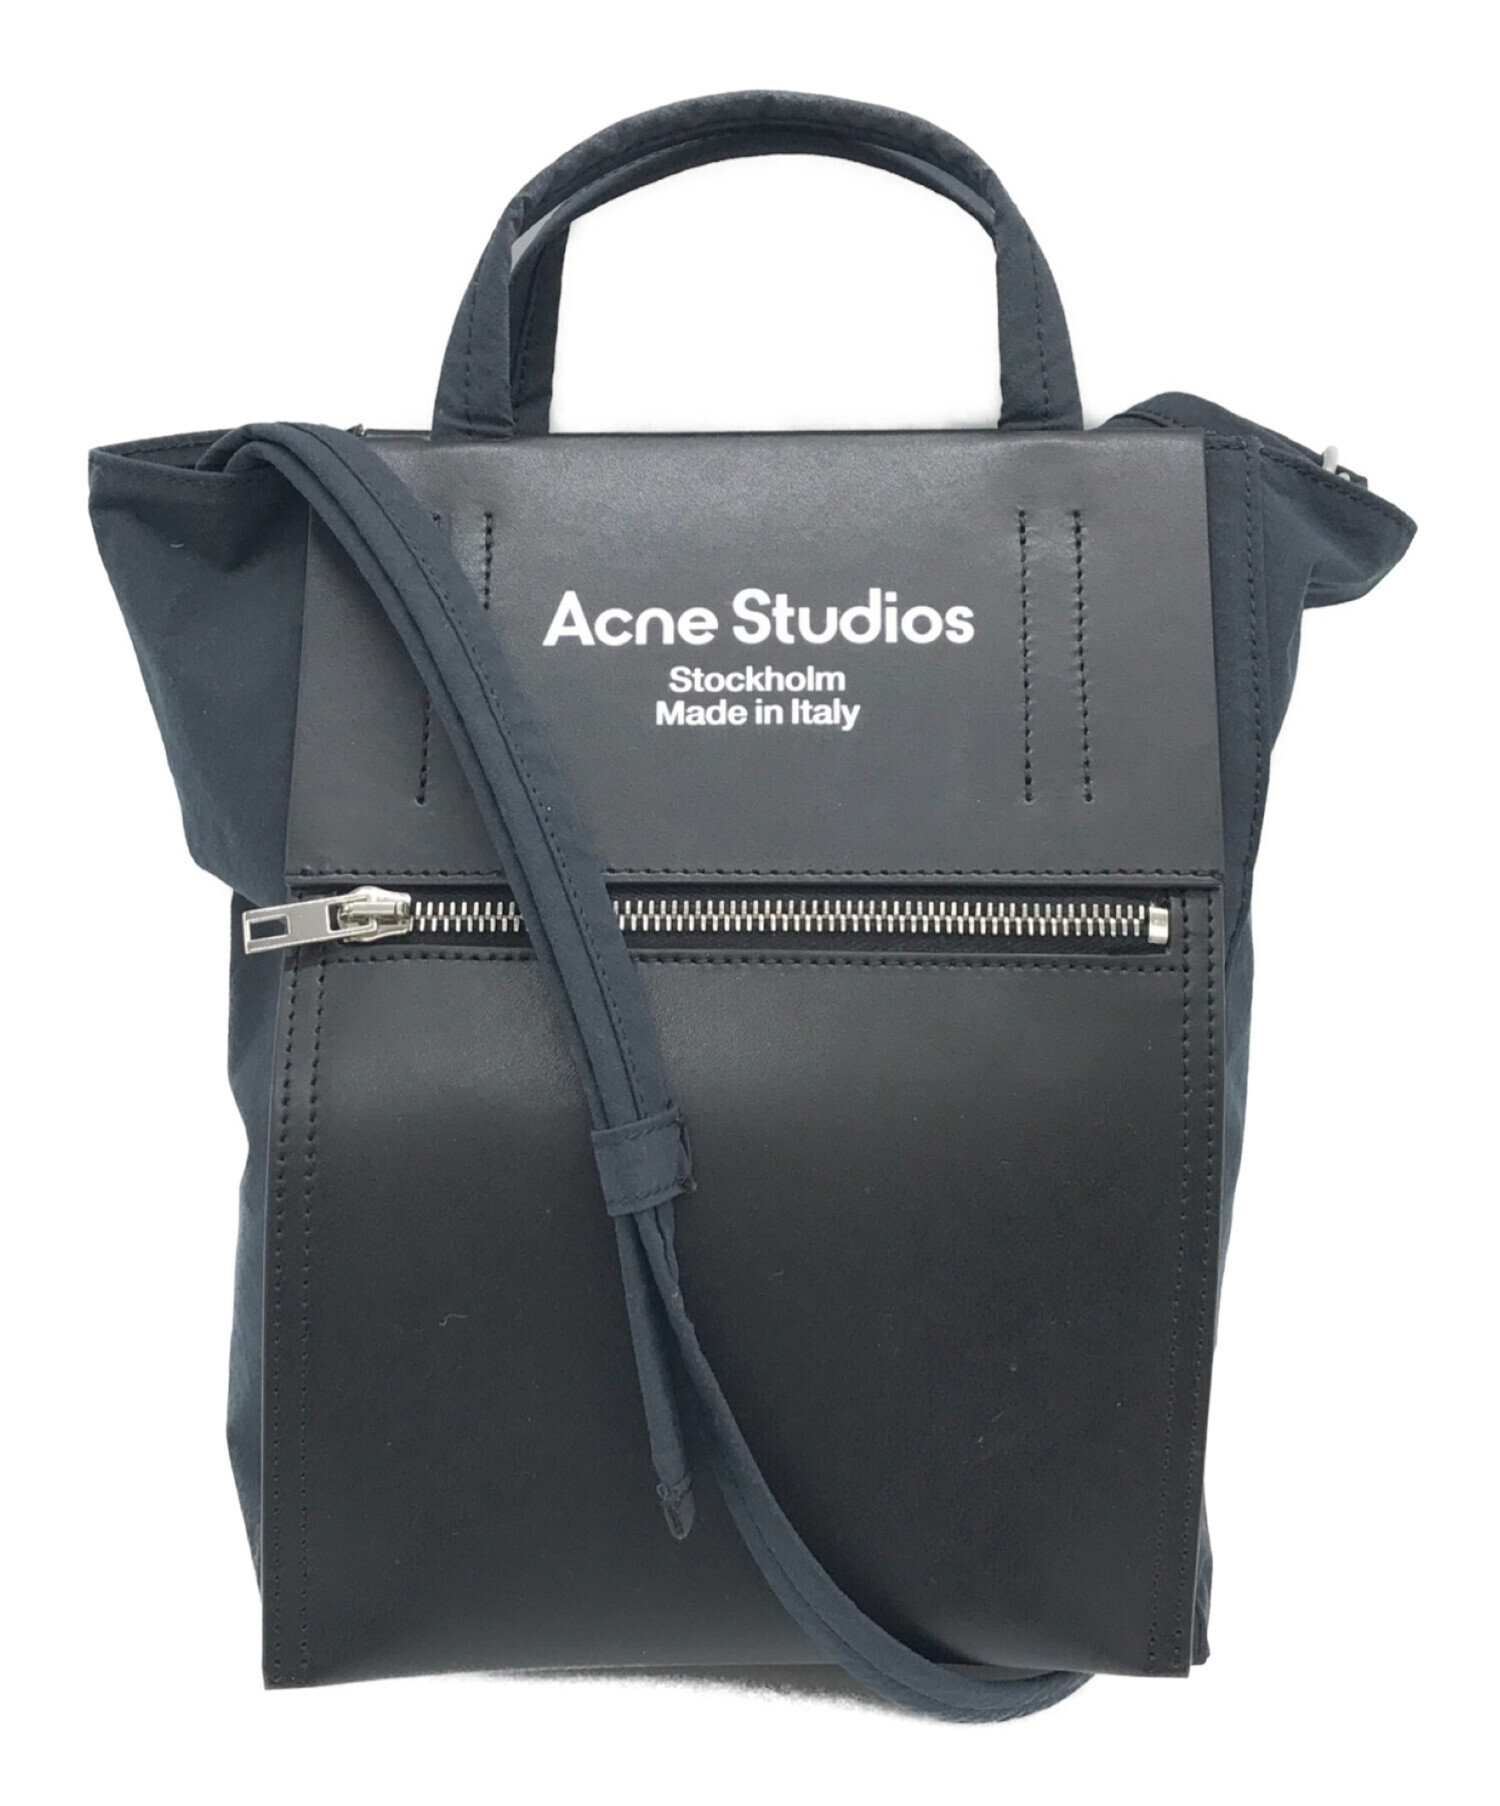 ACNE STUDIOS (アクネストゥディオズ) ペイパリーナイロントートバッグ ブラック サイズ:下記参照